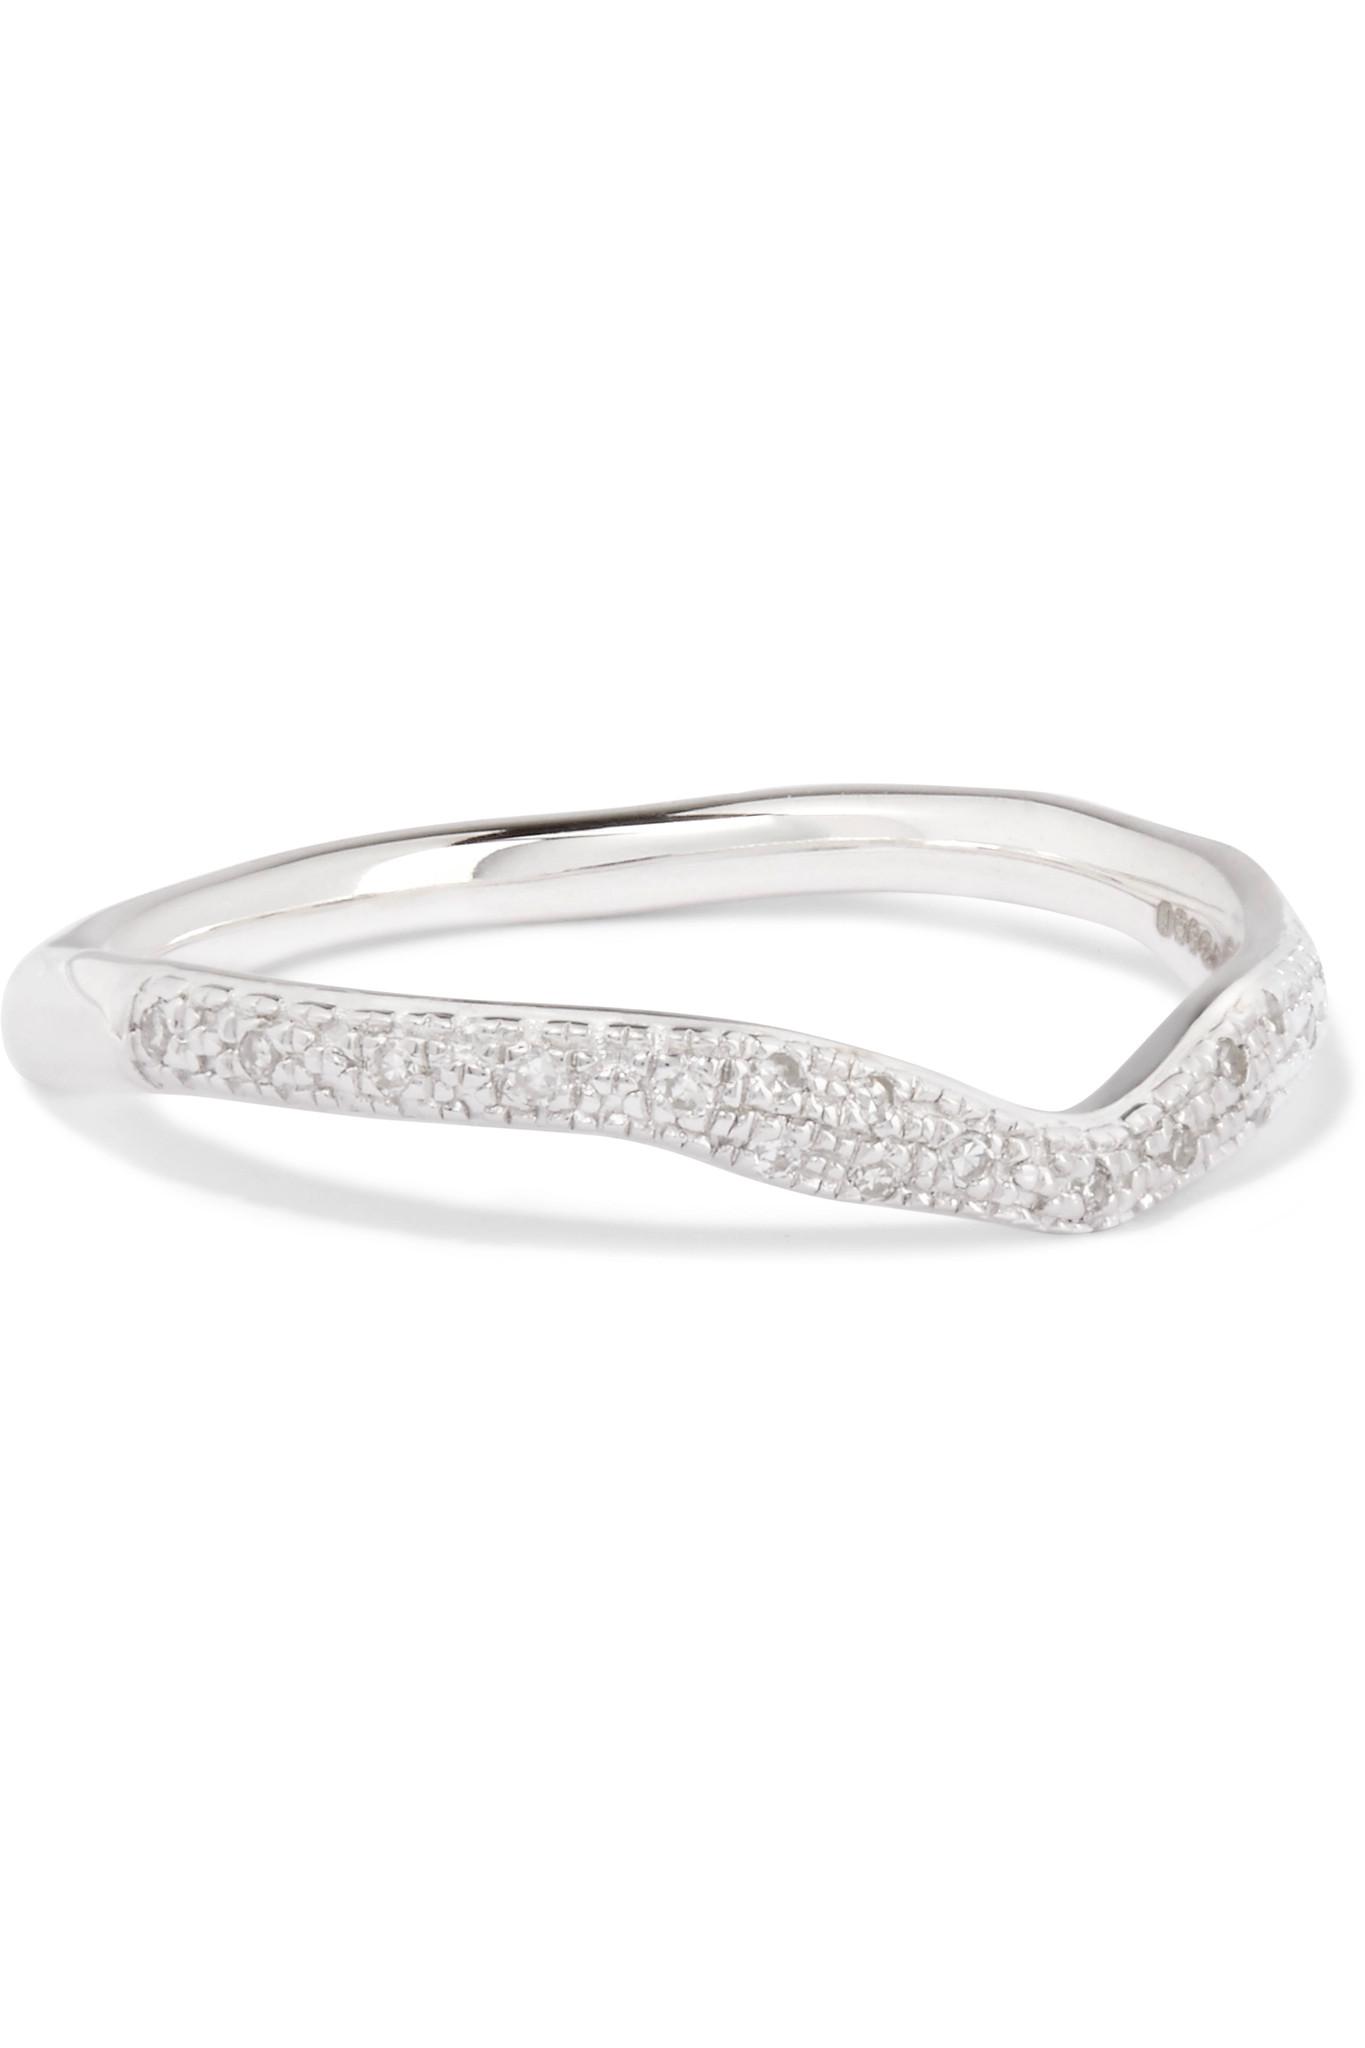 Monica Vinader Riva Sterling Silver Diamond Ring in Metallic - Lyst